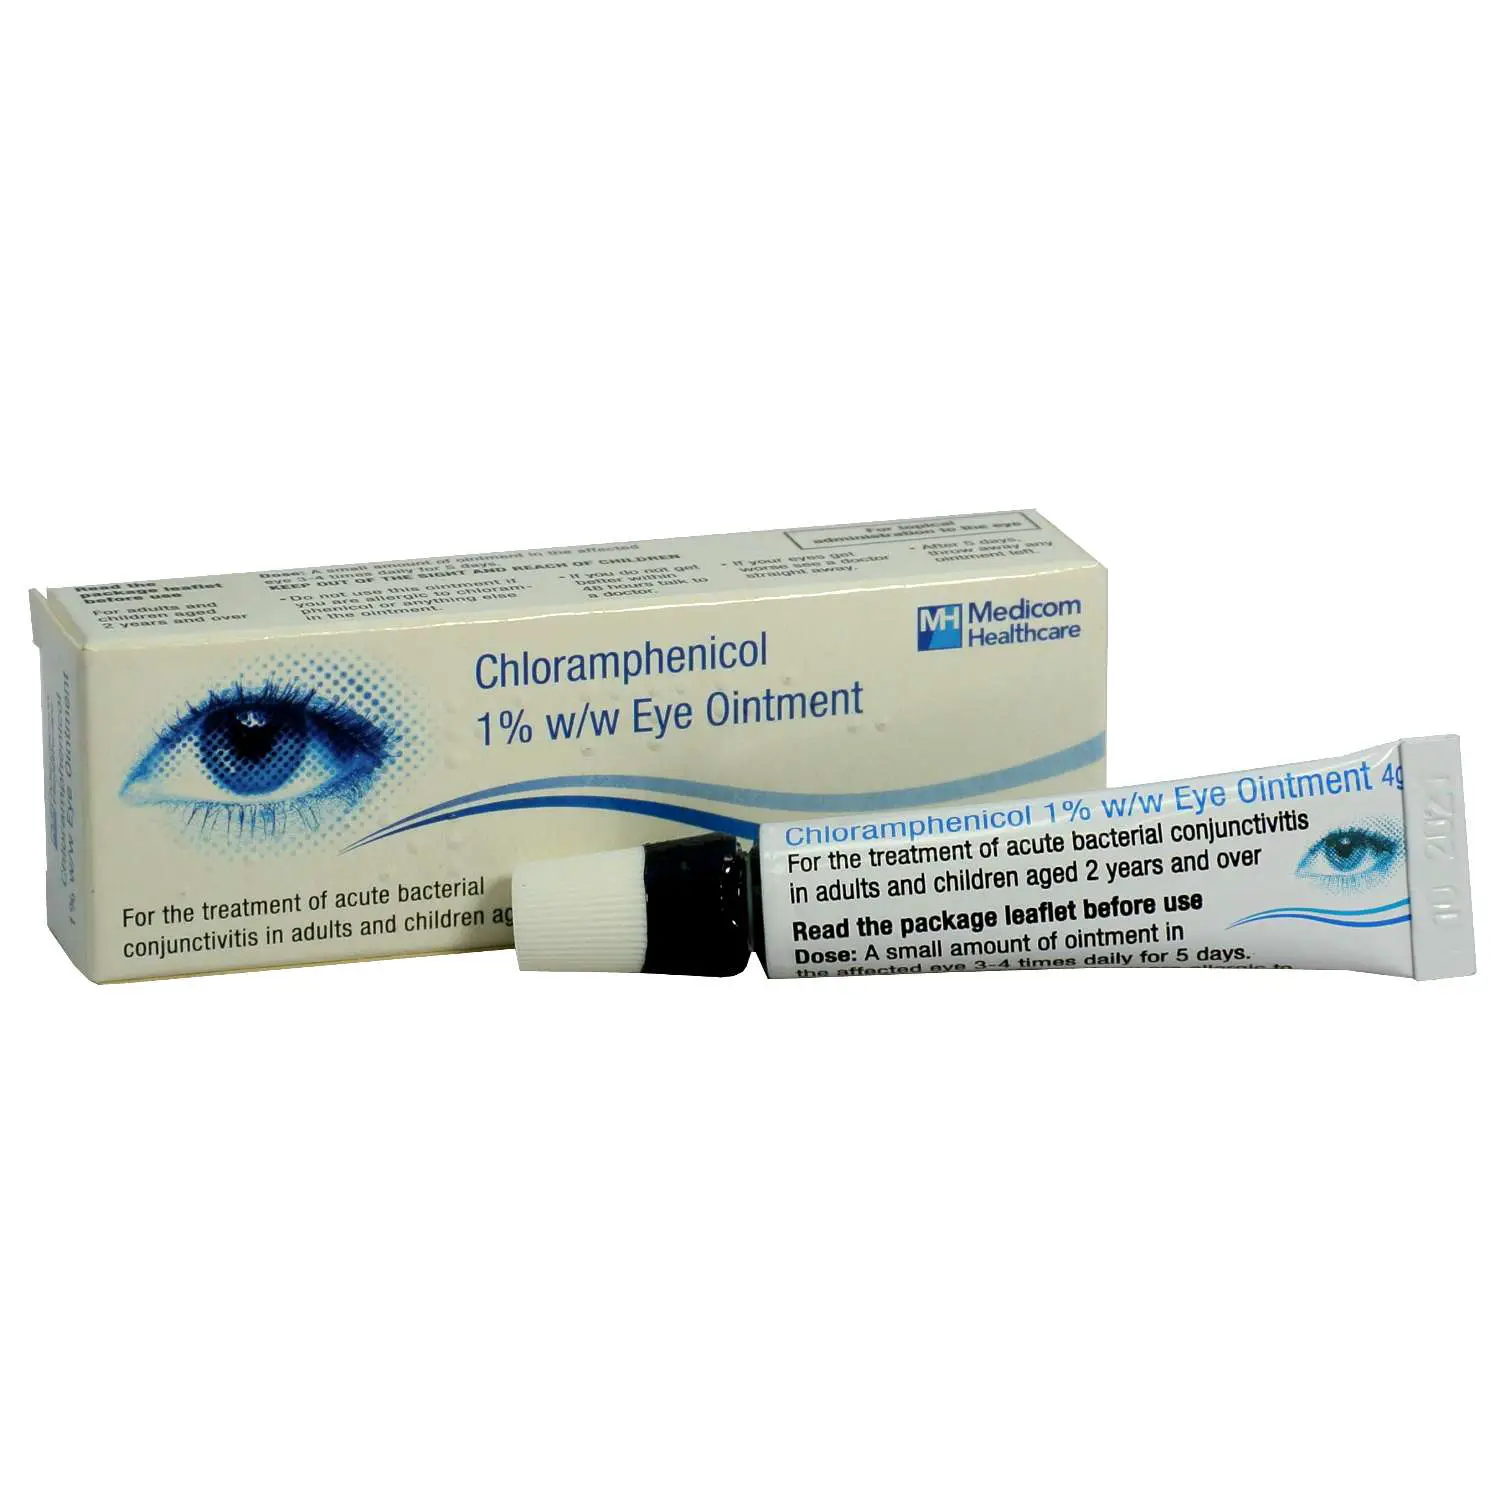 Chloramphenicol Eye Ointment 4g